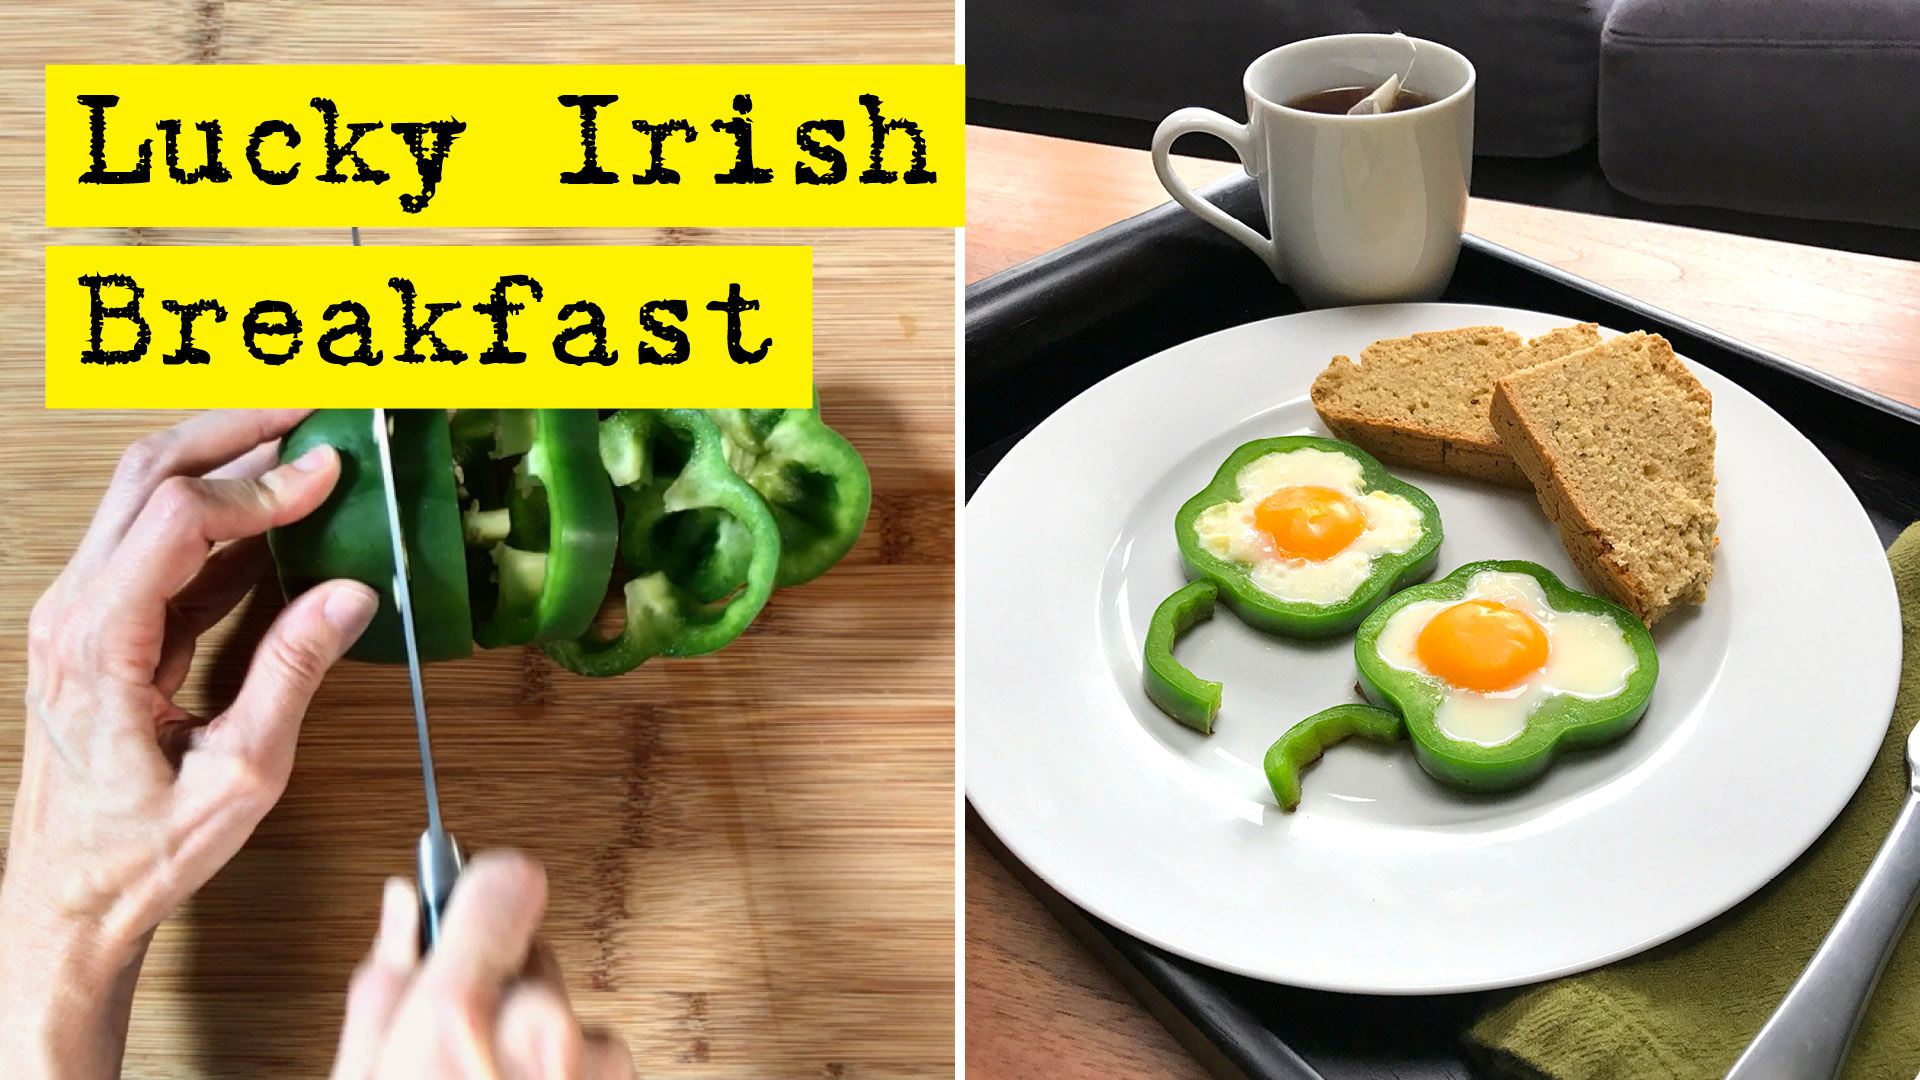 How To Make A Lucky Irish Breakfast by DIY Presto!